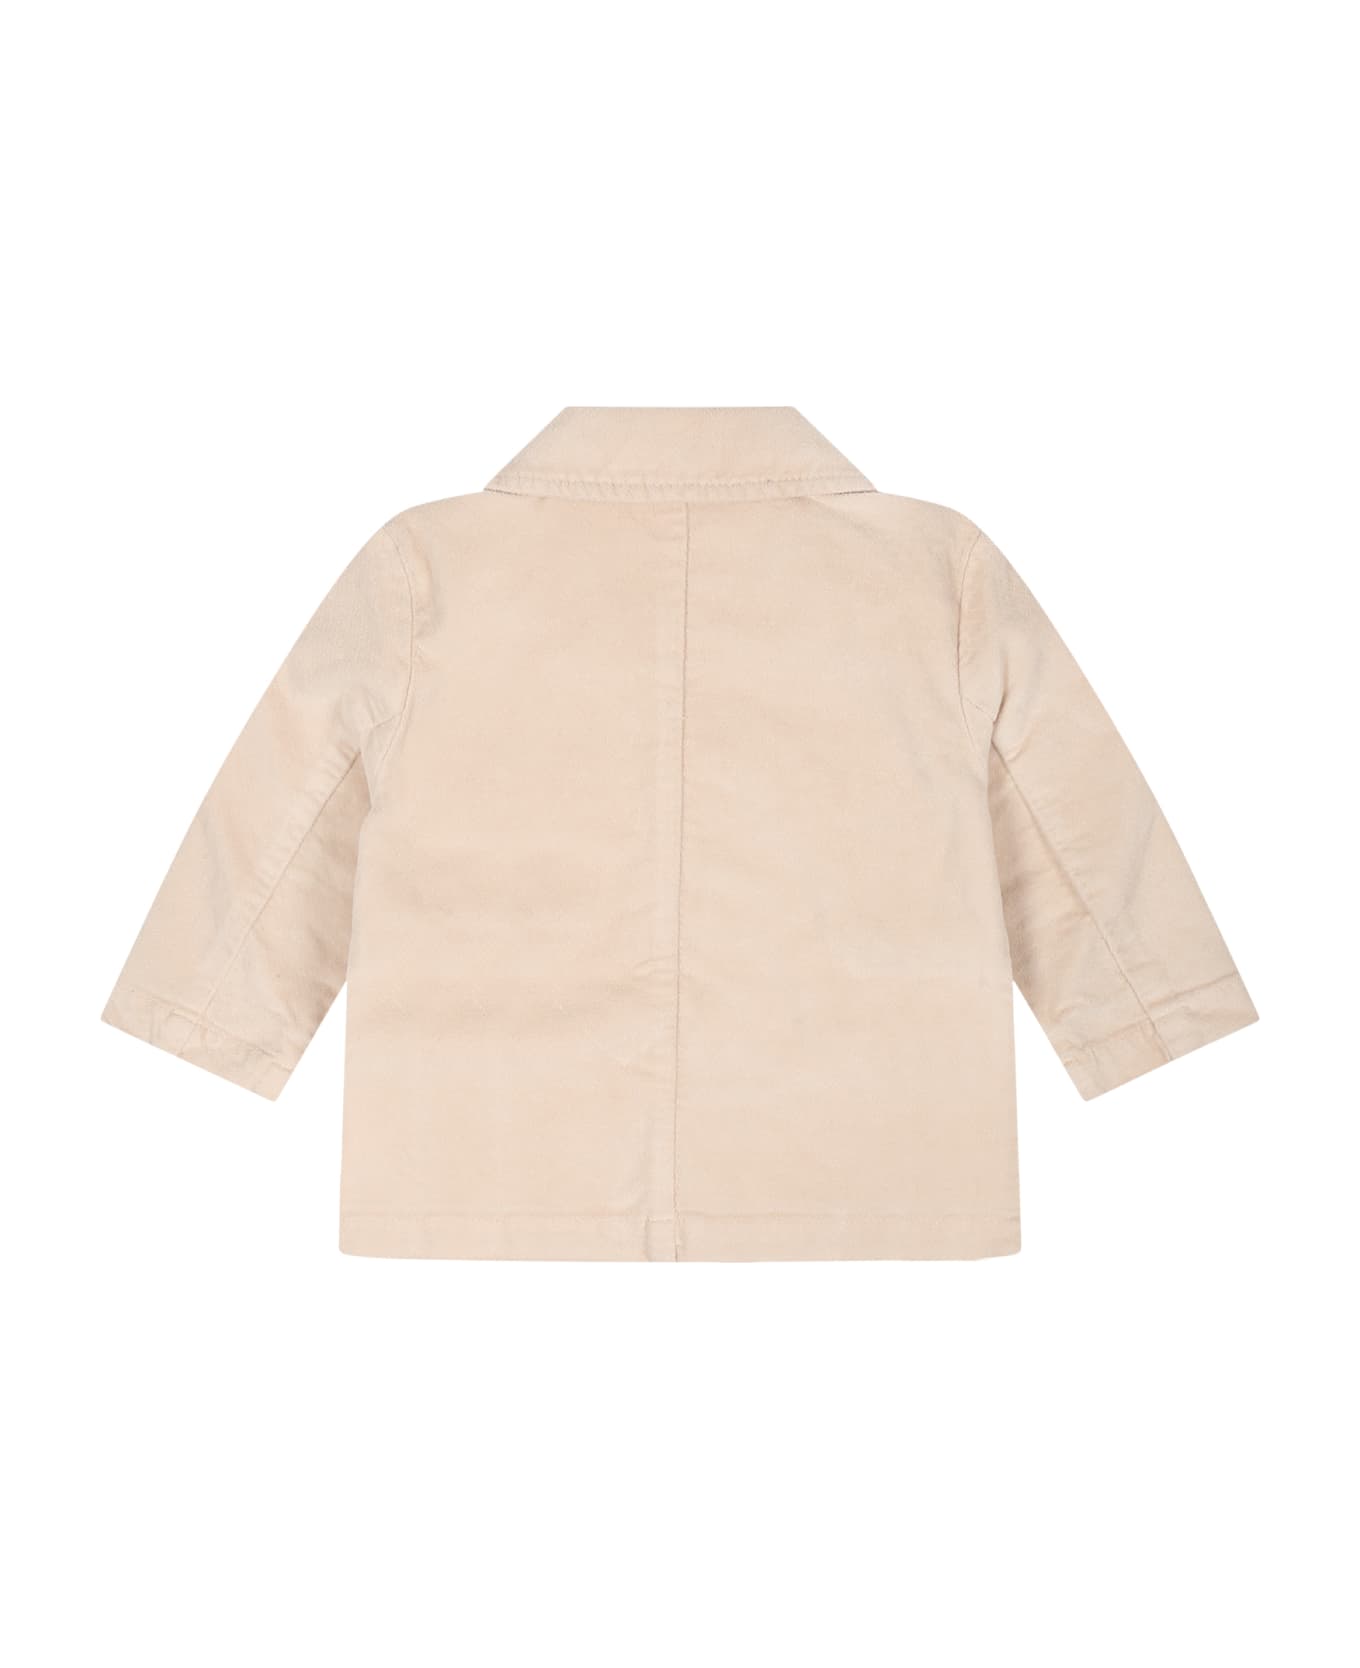 Zhoe & Tobiah Ivory Jacket For Baby Boy - Ivory